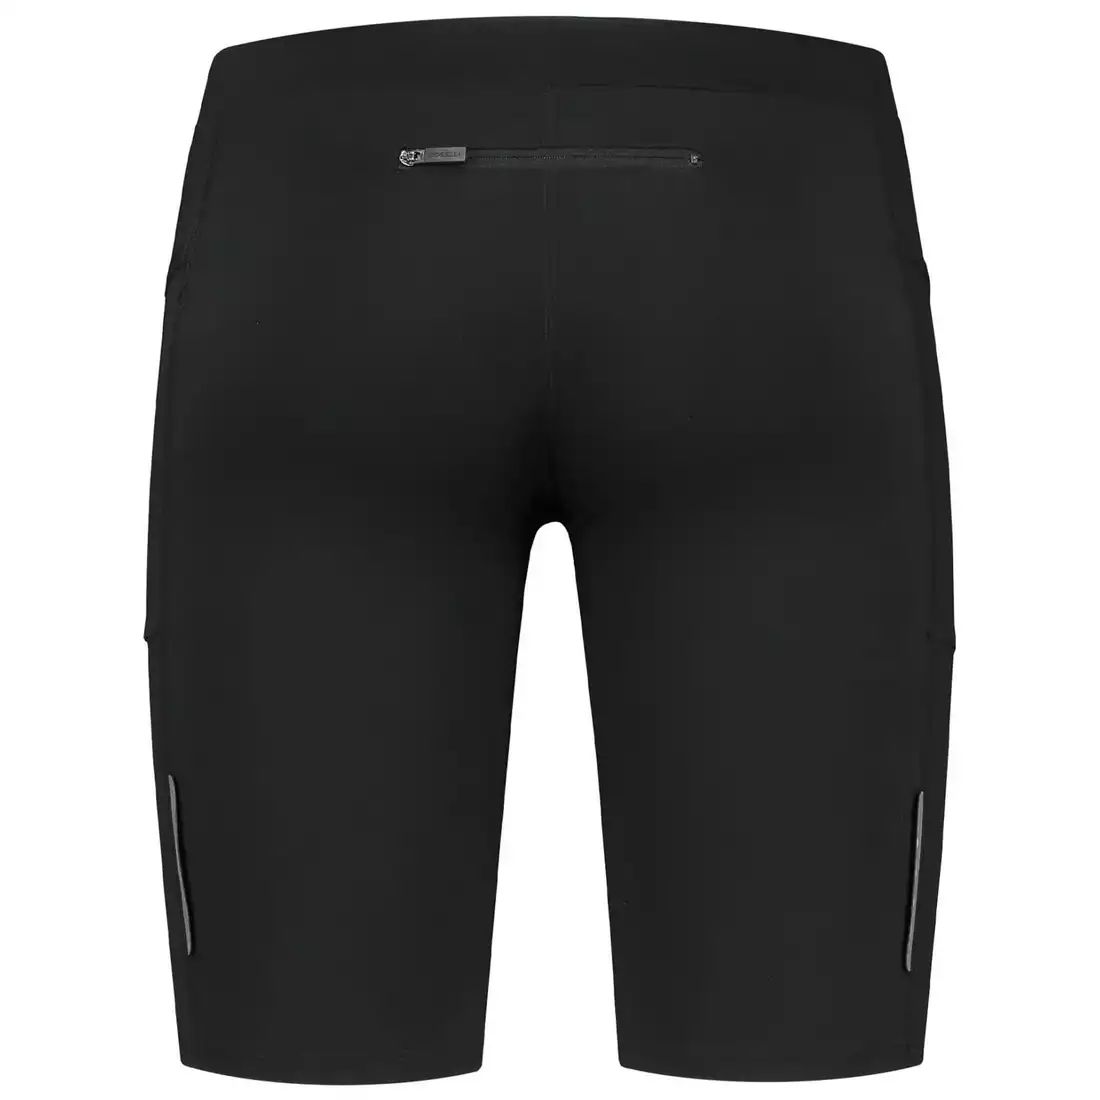 ROGELLI ESSENTIAL Men's running shorts, black